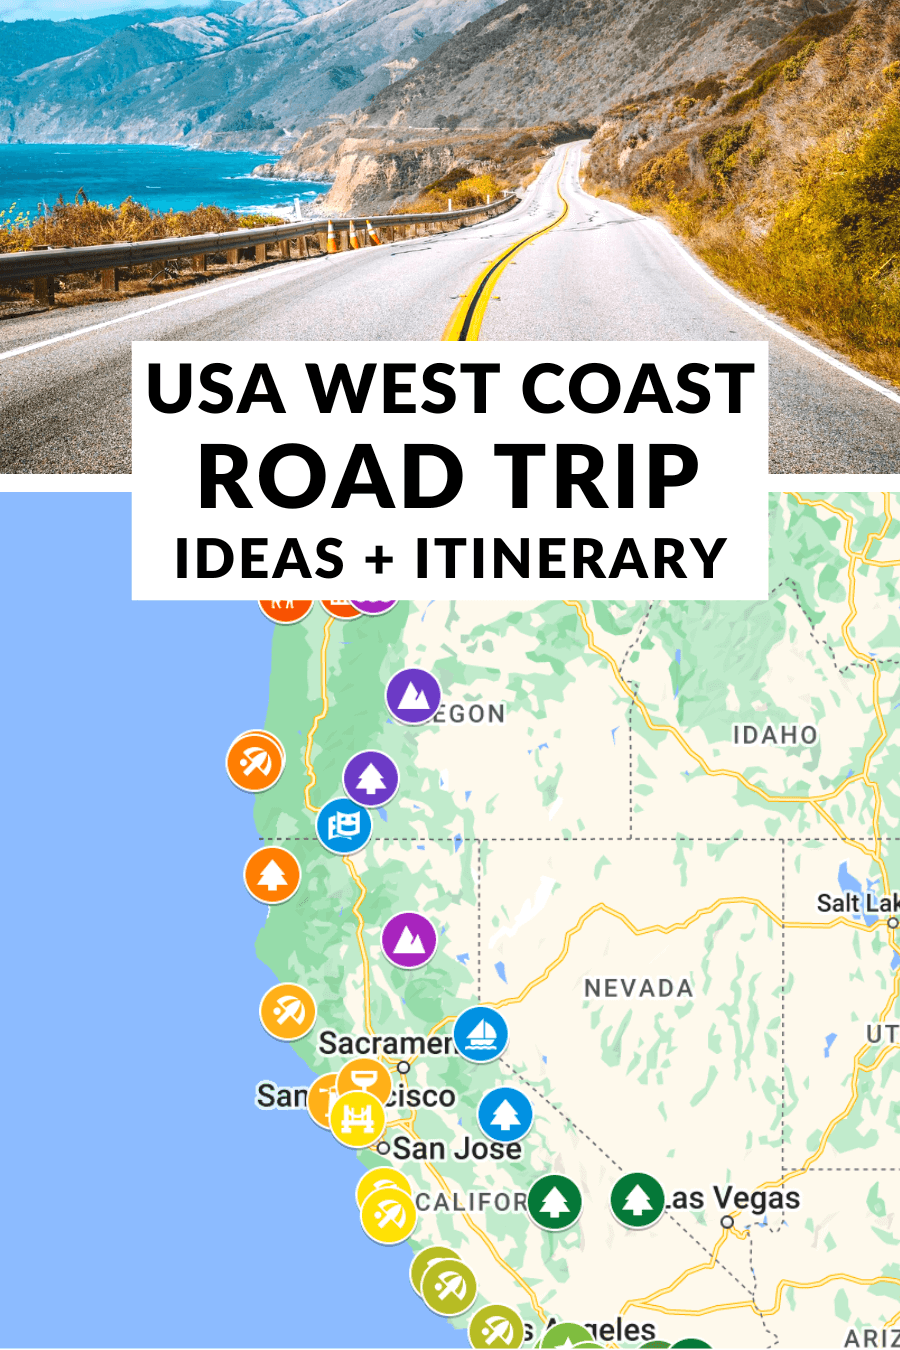 The Best USA West Coast + Ideas